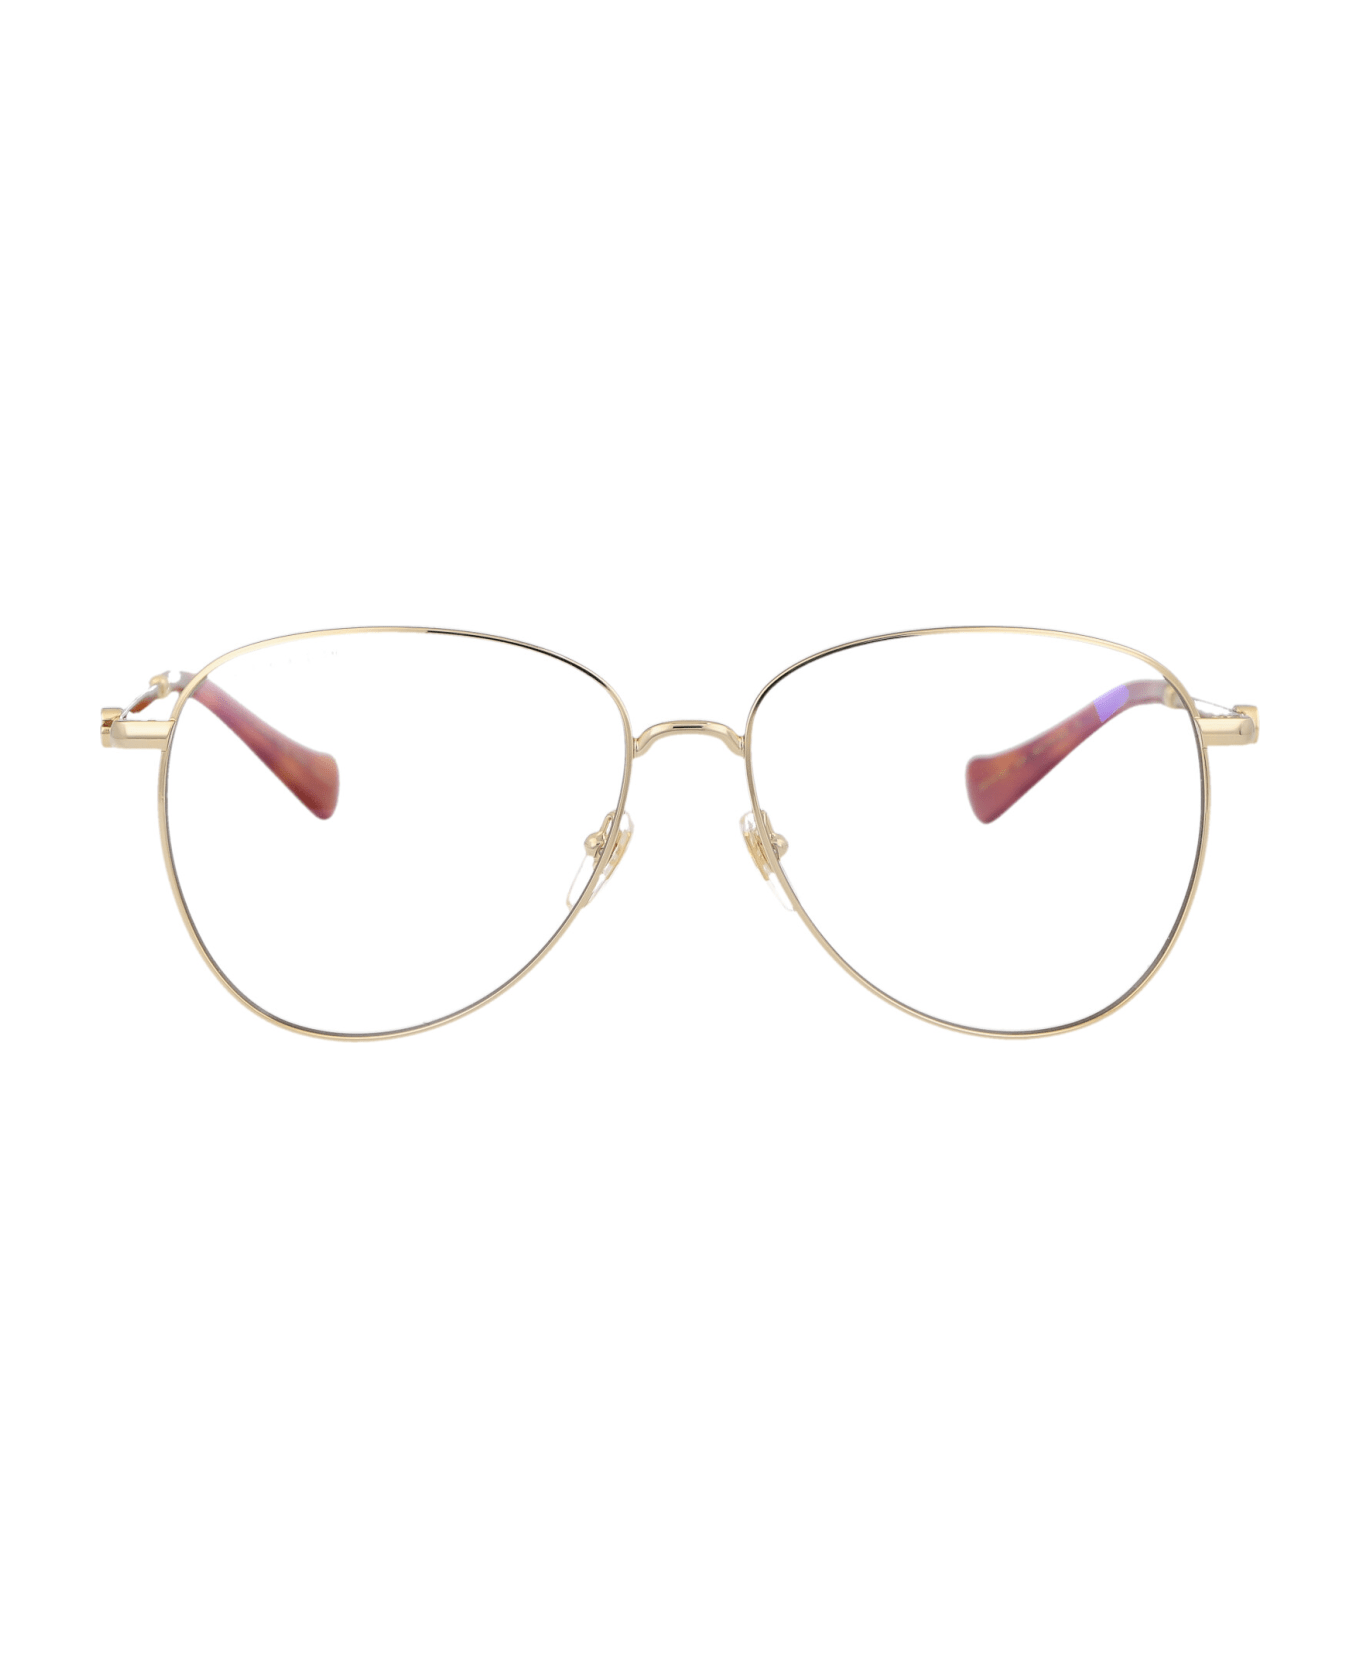 Gucci Eyewear Gg1419s Sunglasses - 004 GOLD GOLD TRANSPARENT